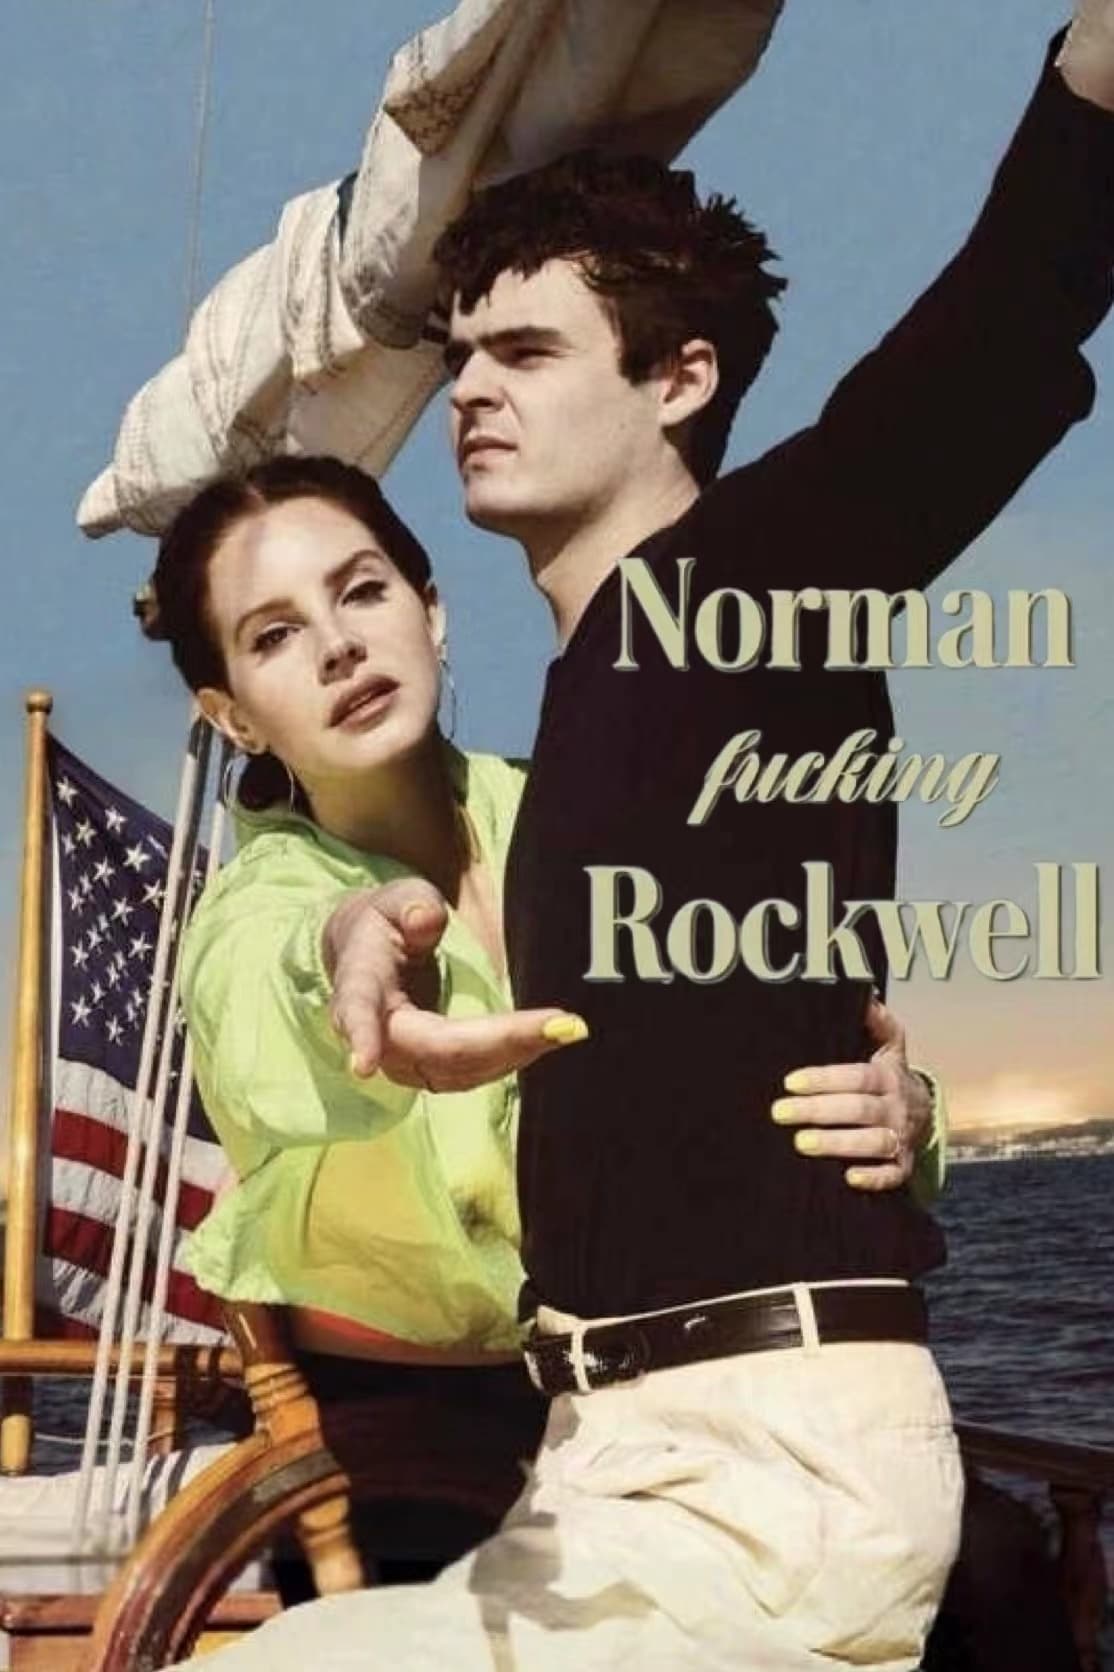 Norman Fucking Rockwell!